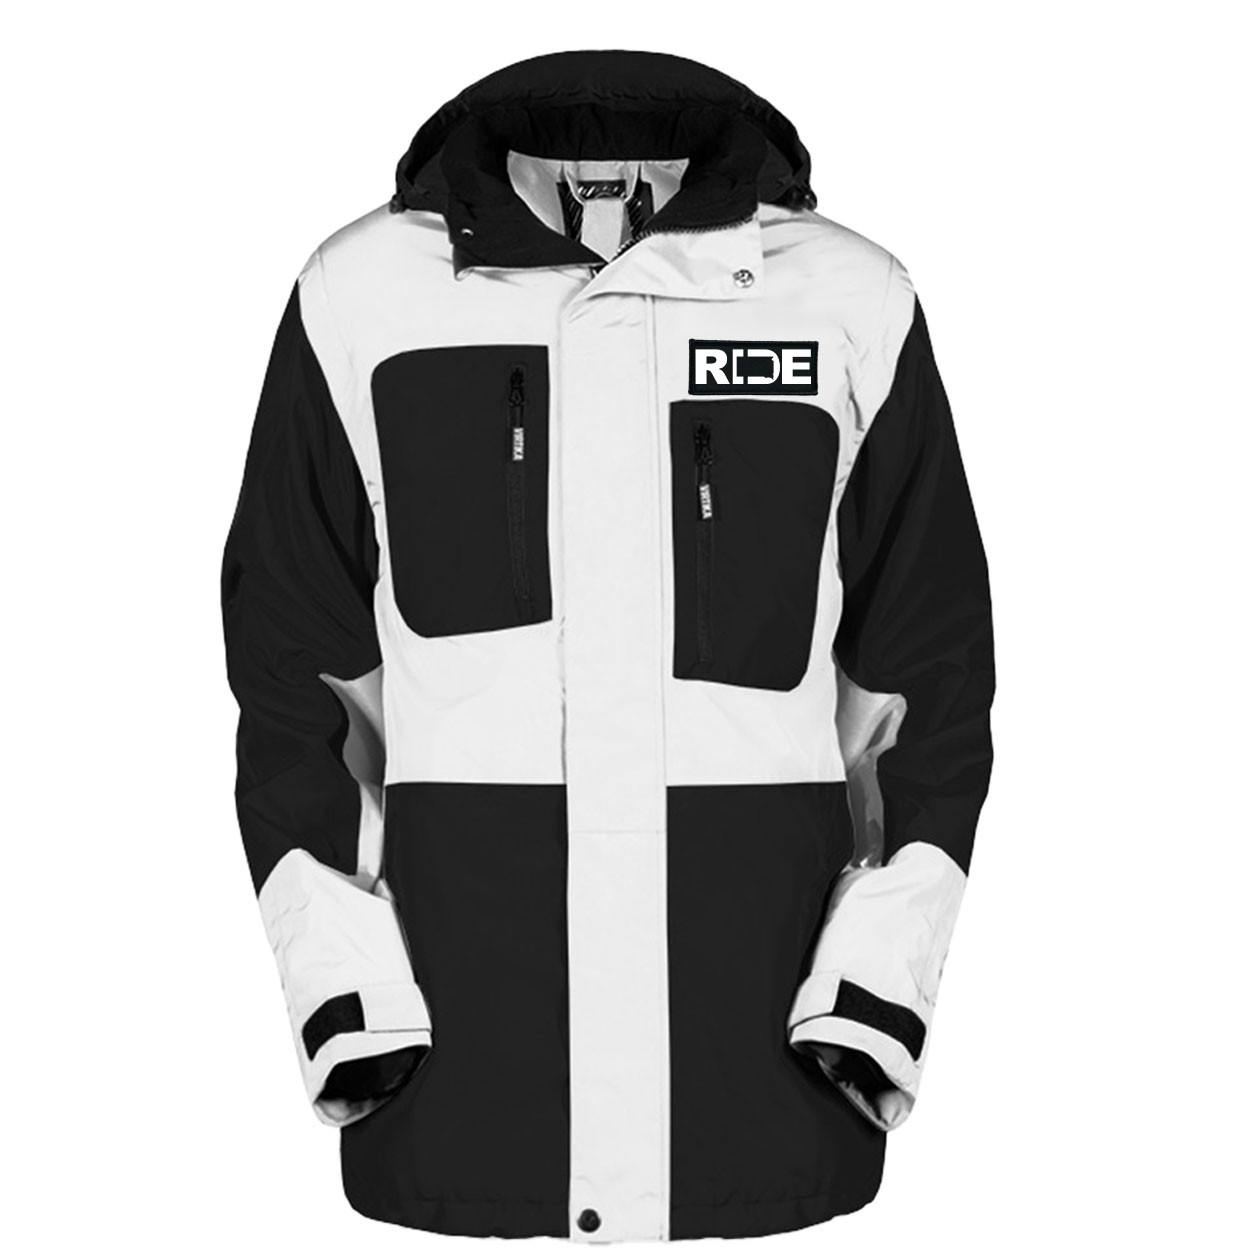 Ride South Dakota Classic Woven Patch Pro Snowboard Jacket (Black/White)